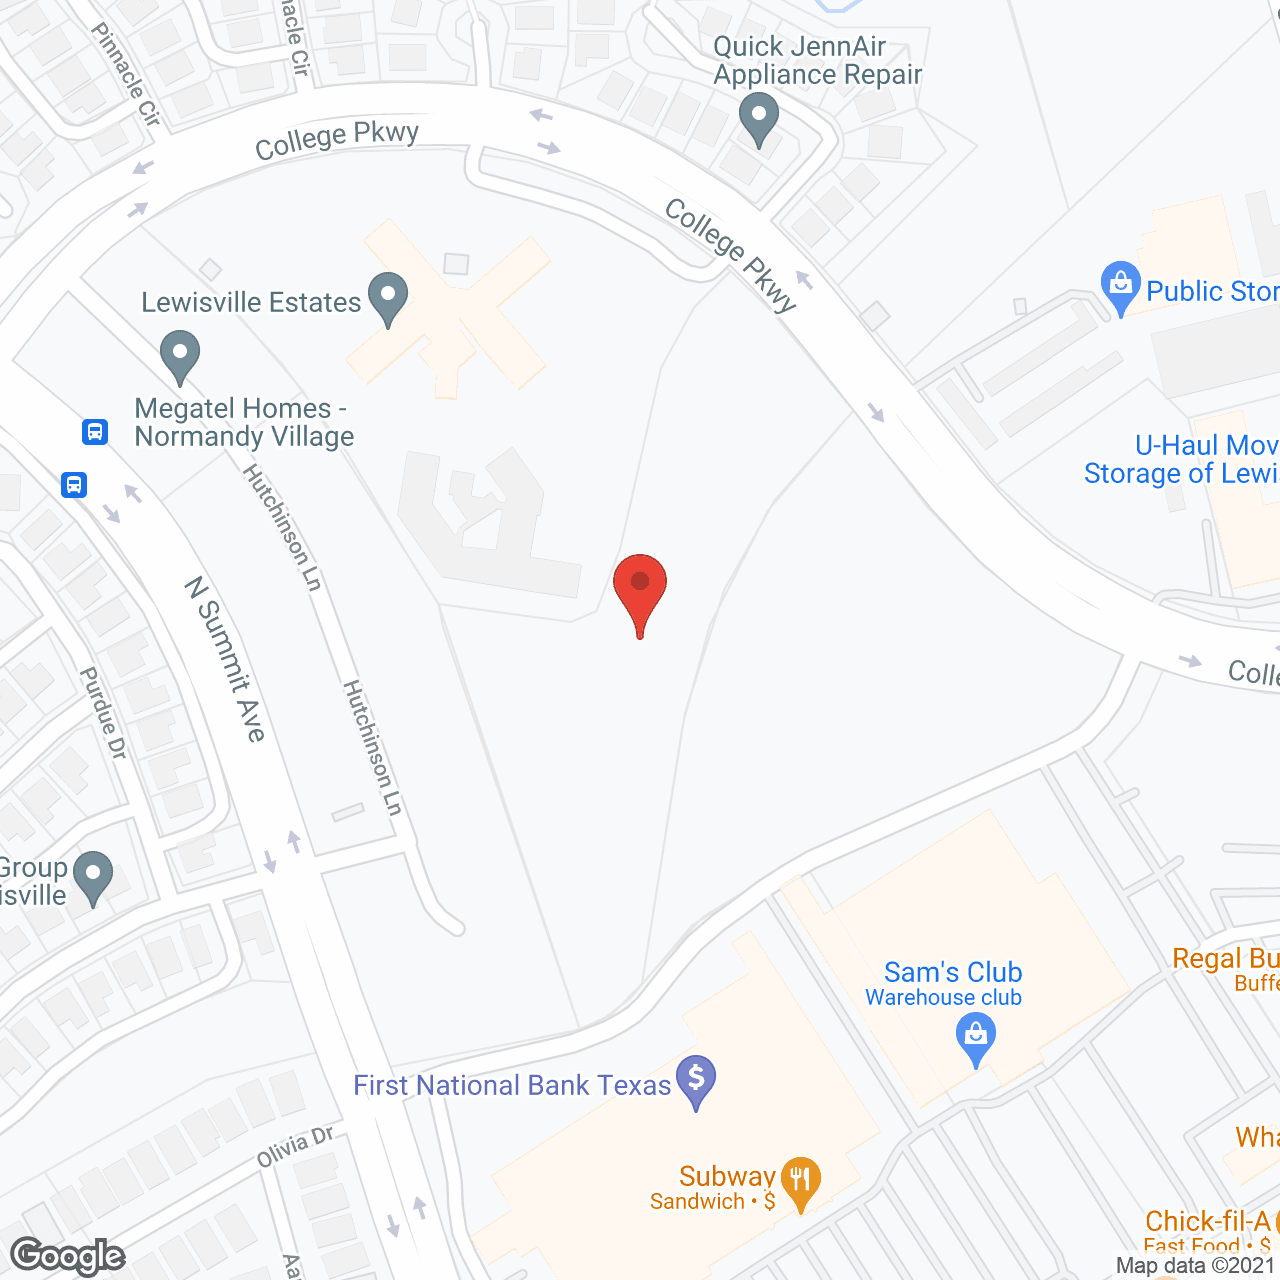 Lewisville Estates in google map